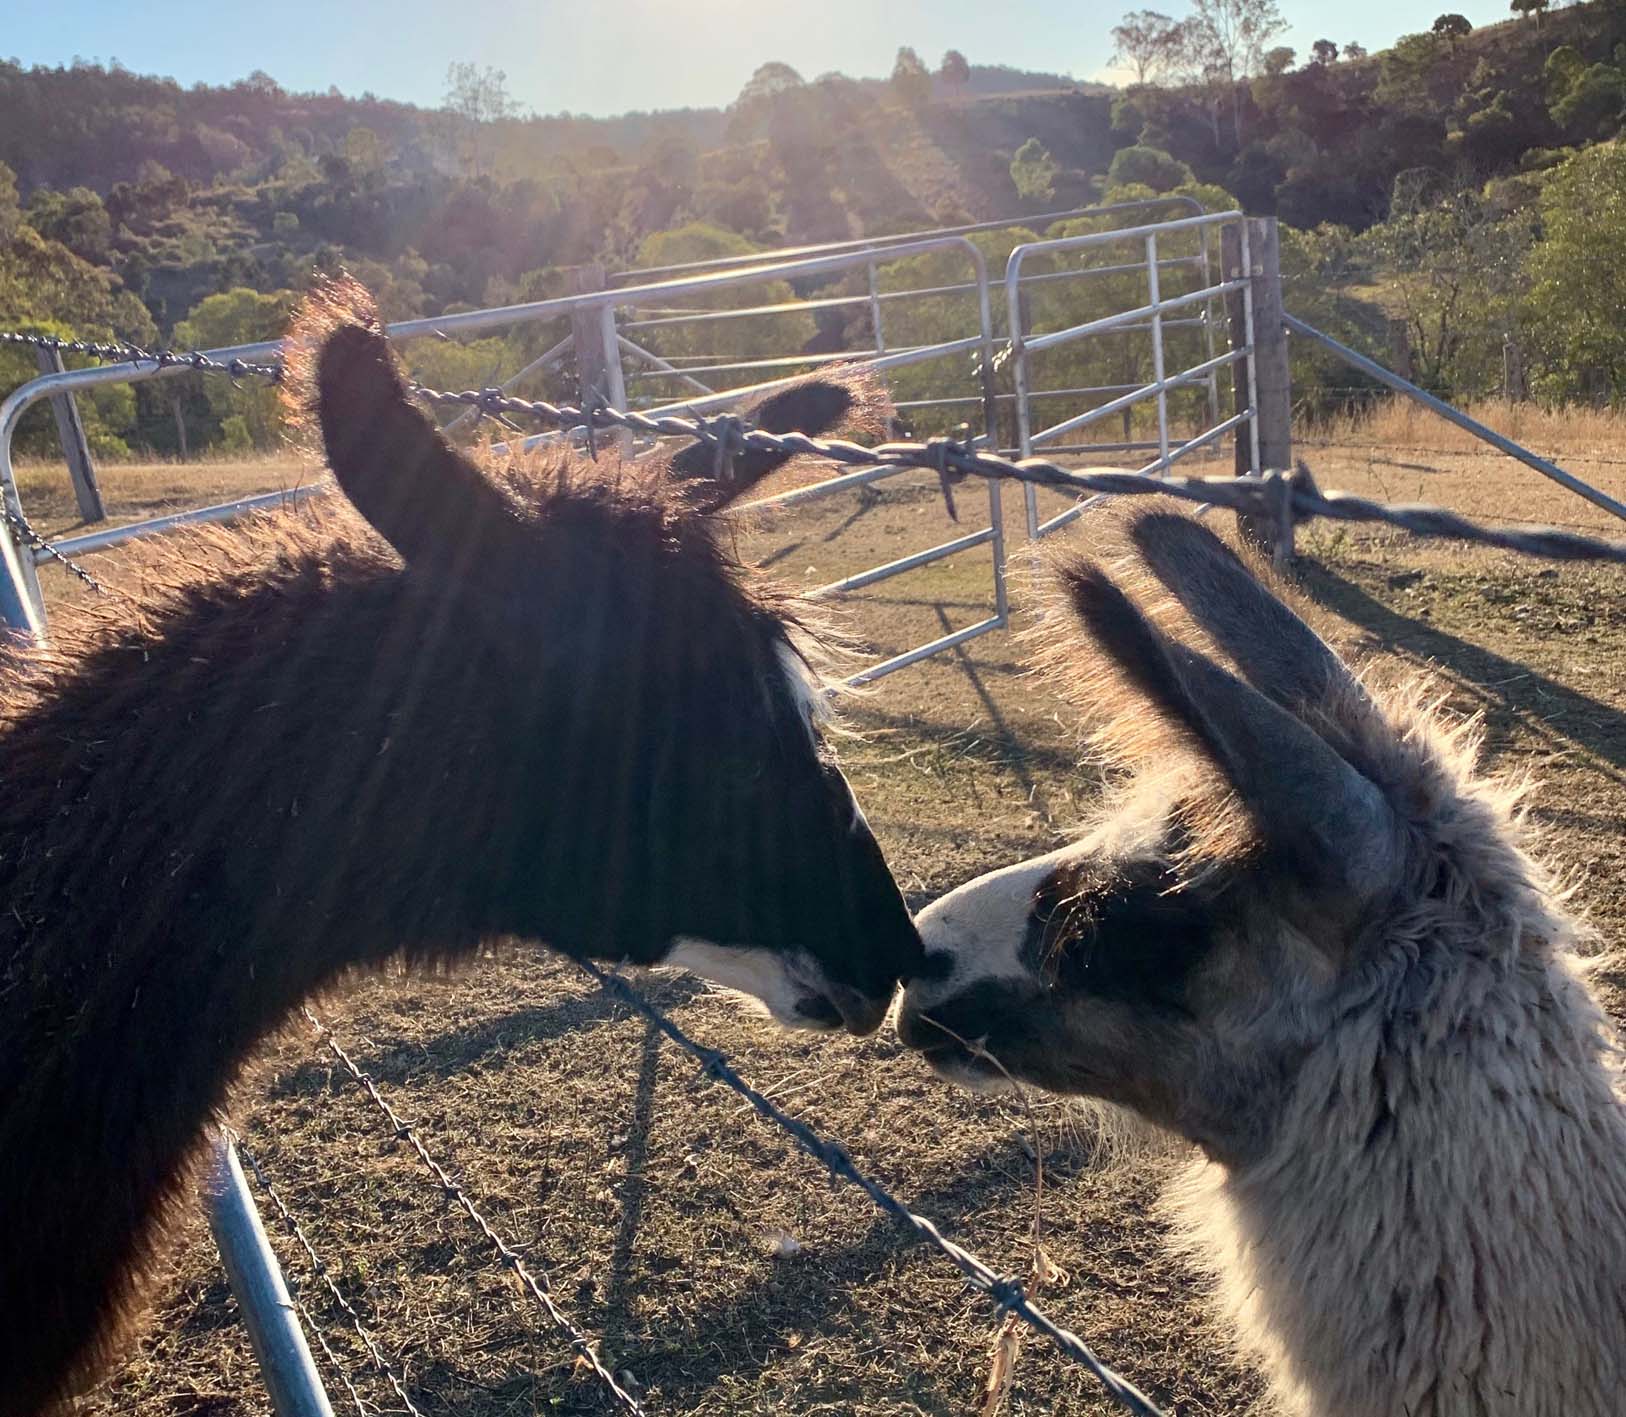 Kisses at the Llama Farm